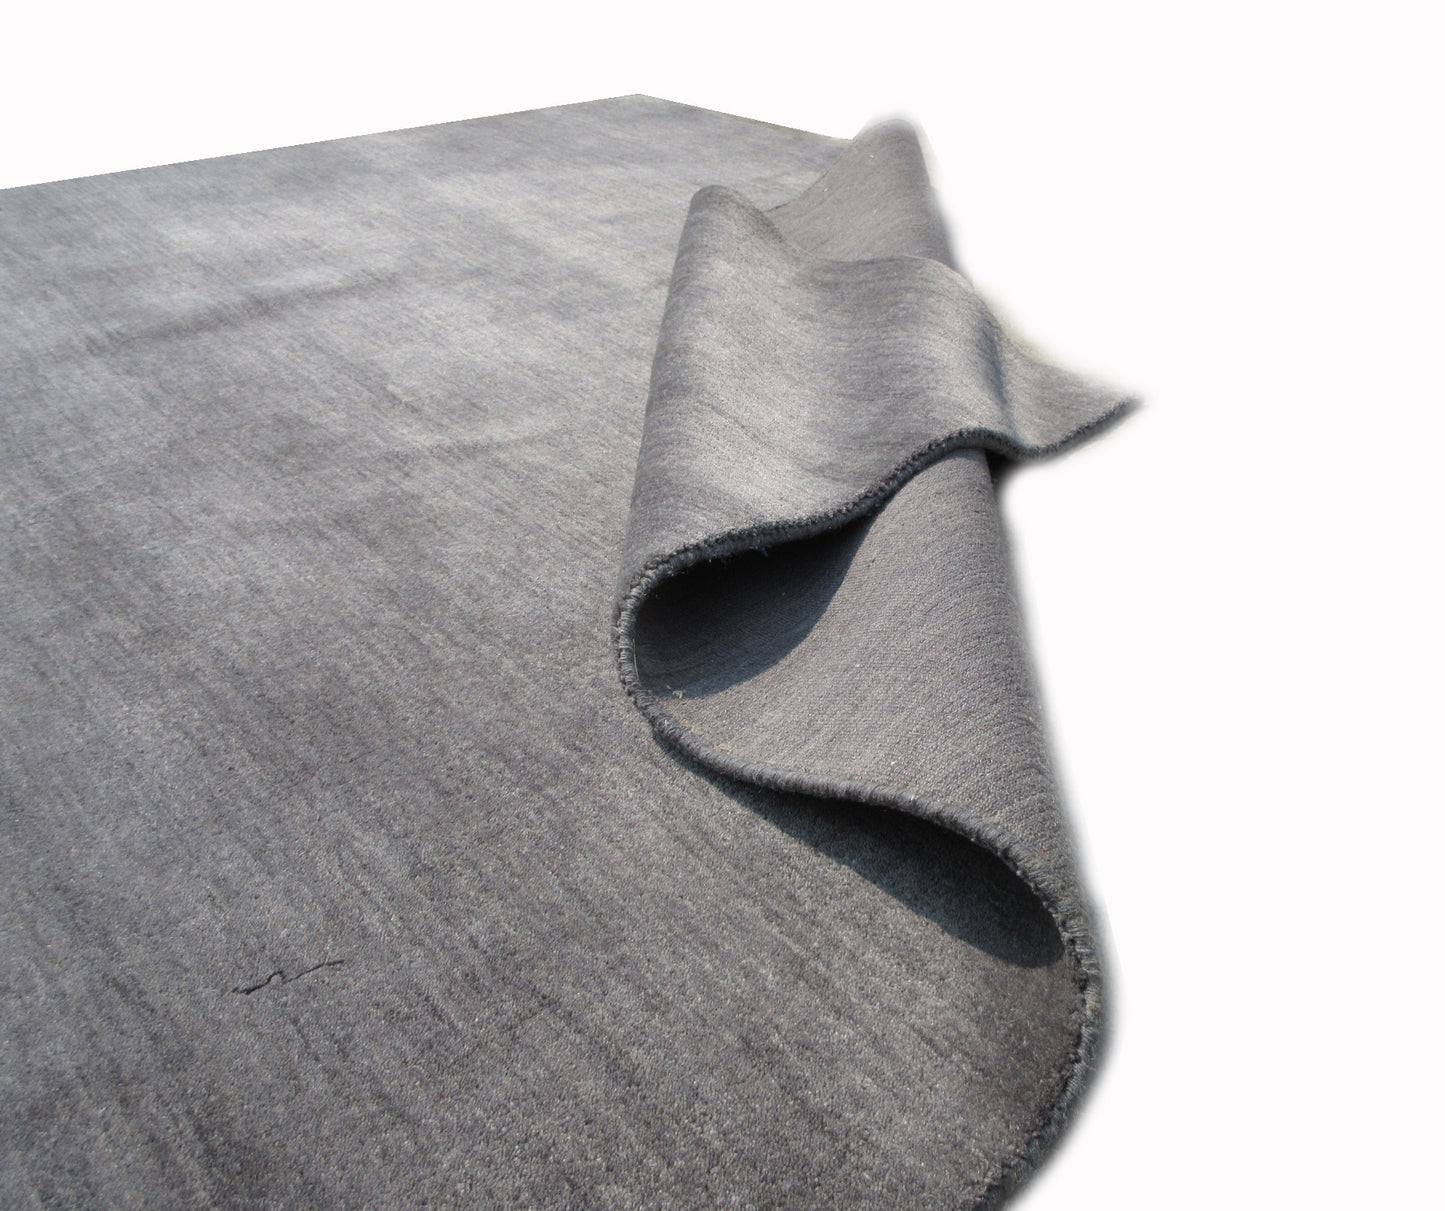 6X9 Gray Silk Modern Handmade Area Rug